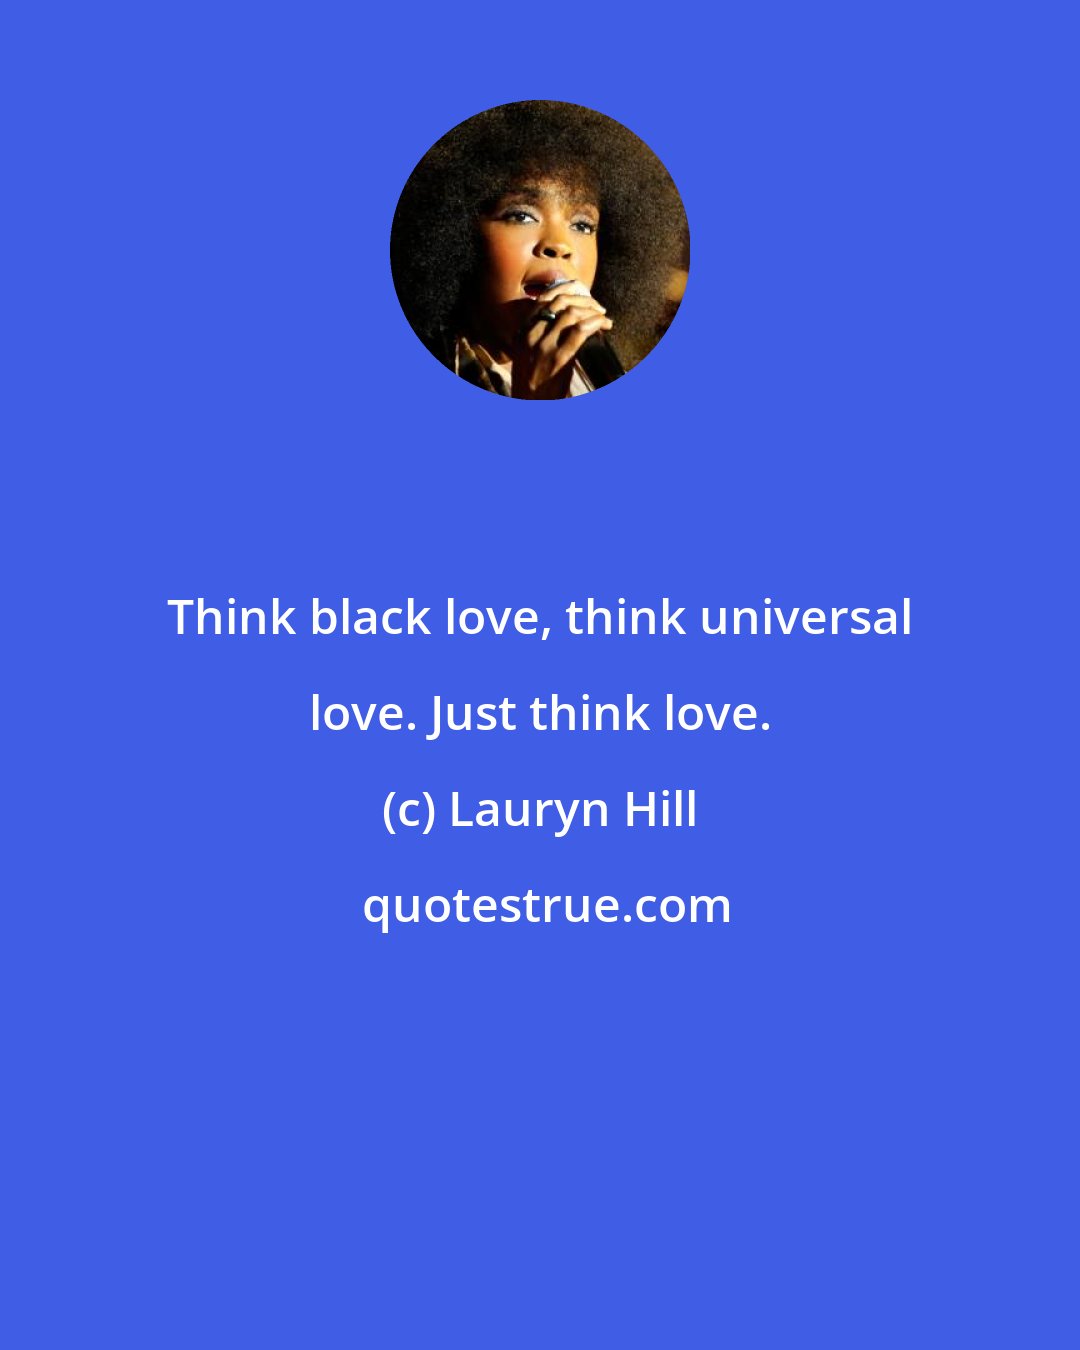 Lauryn Hill: Think black love, think universal love. Just think love.